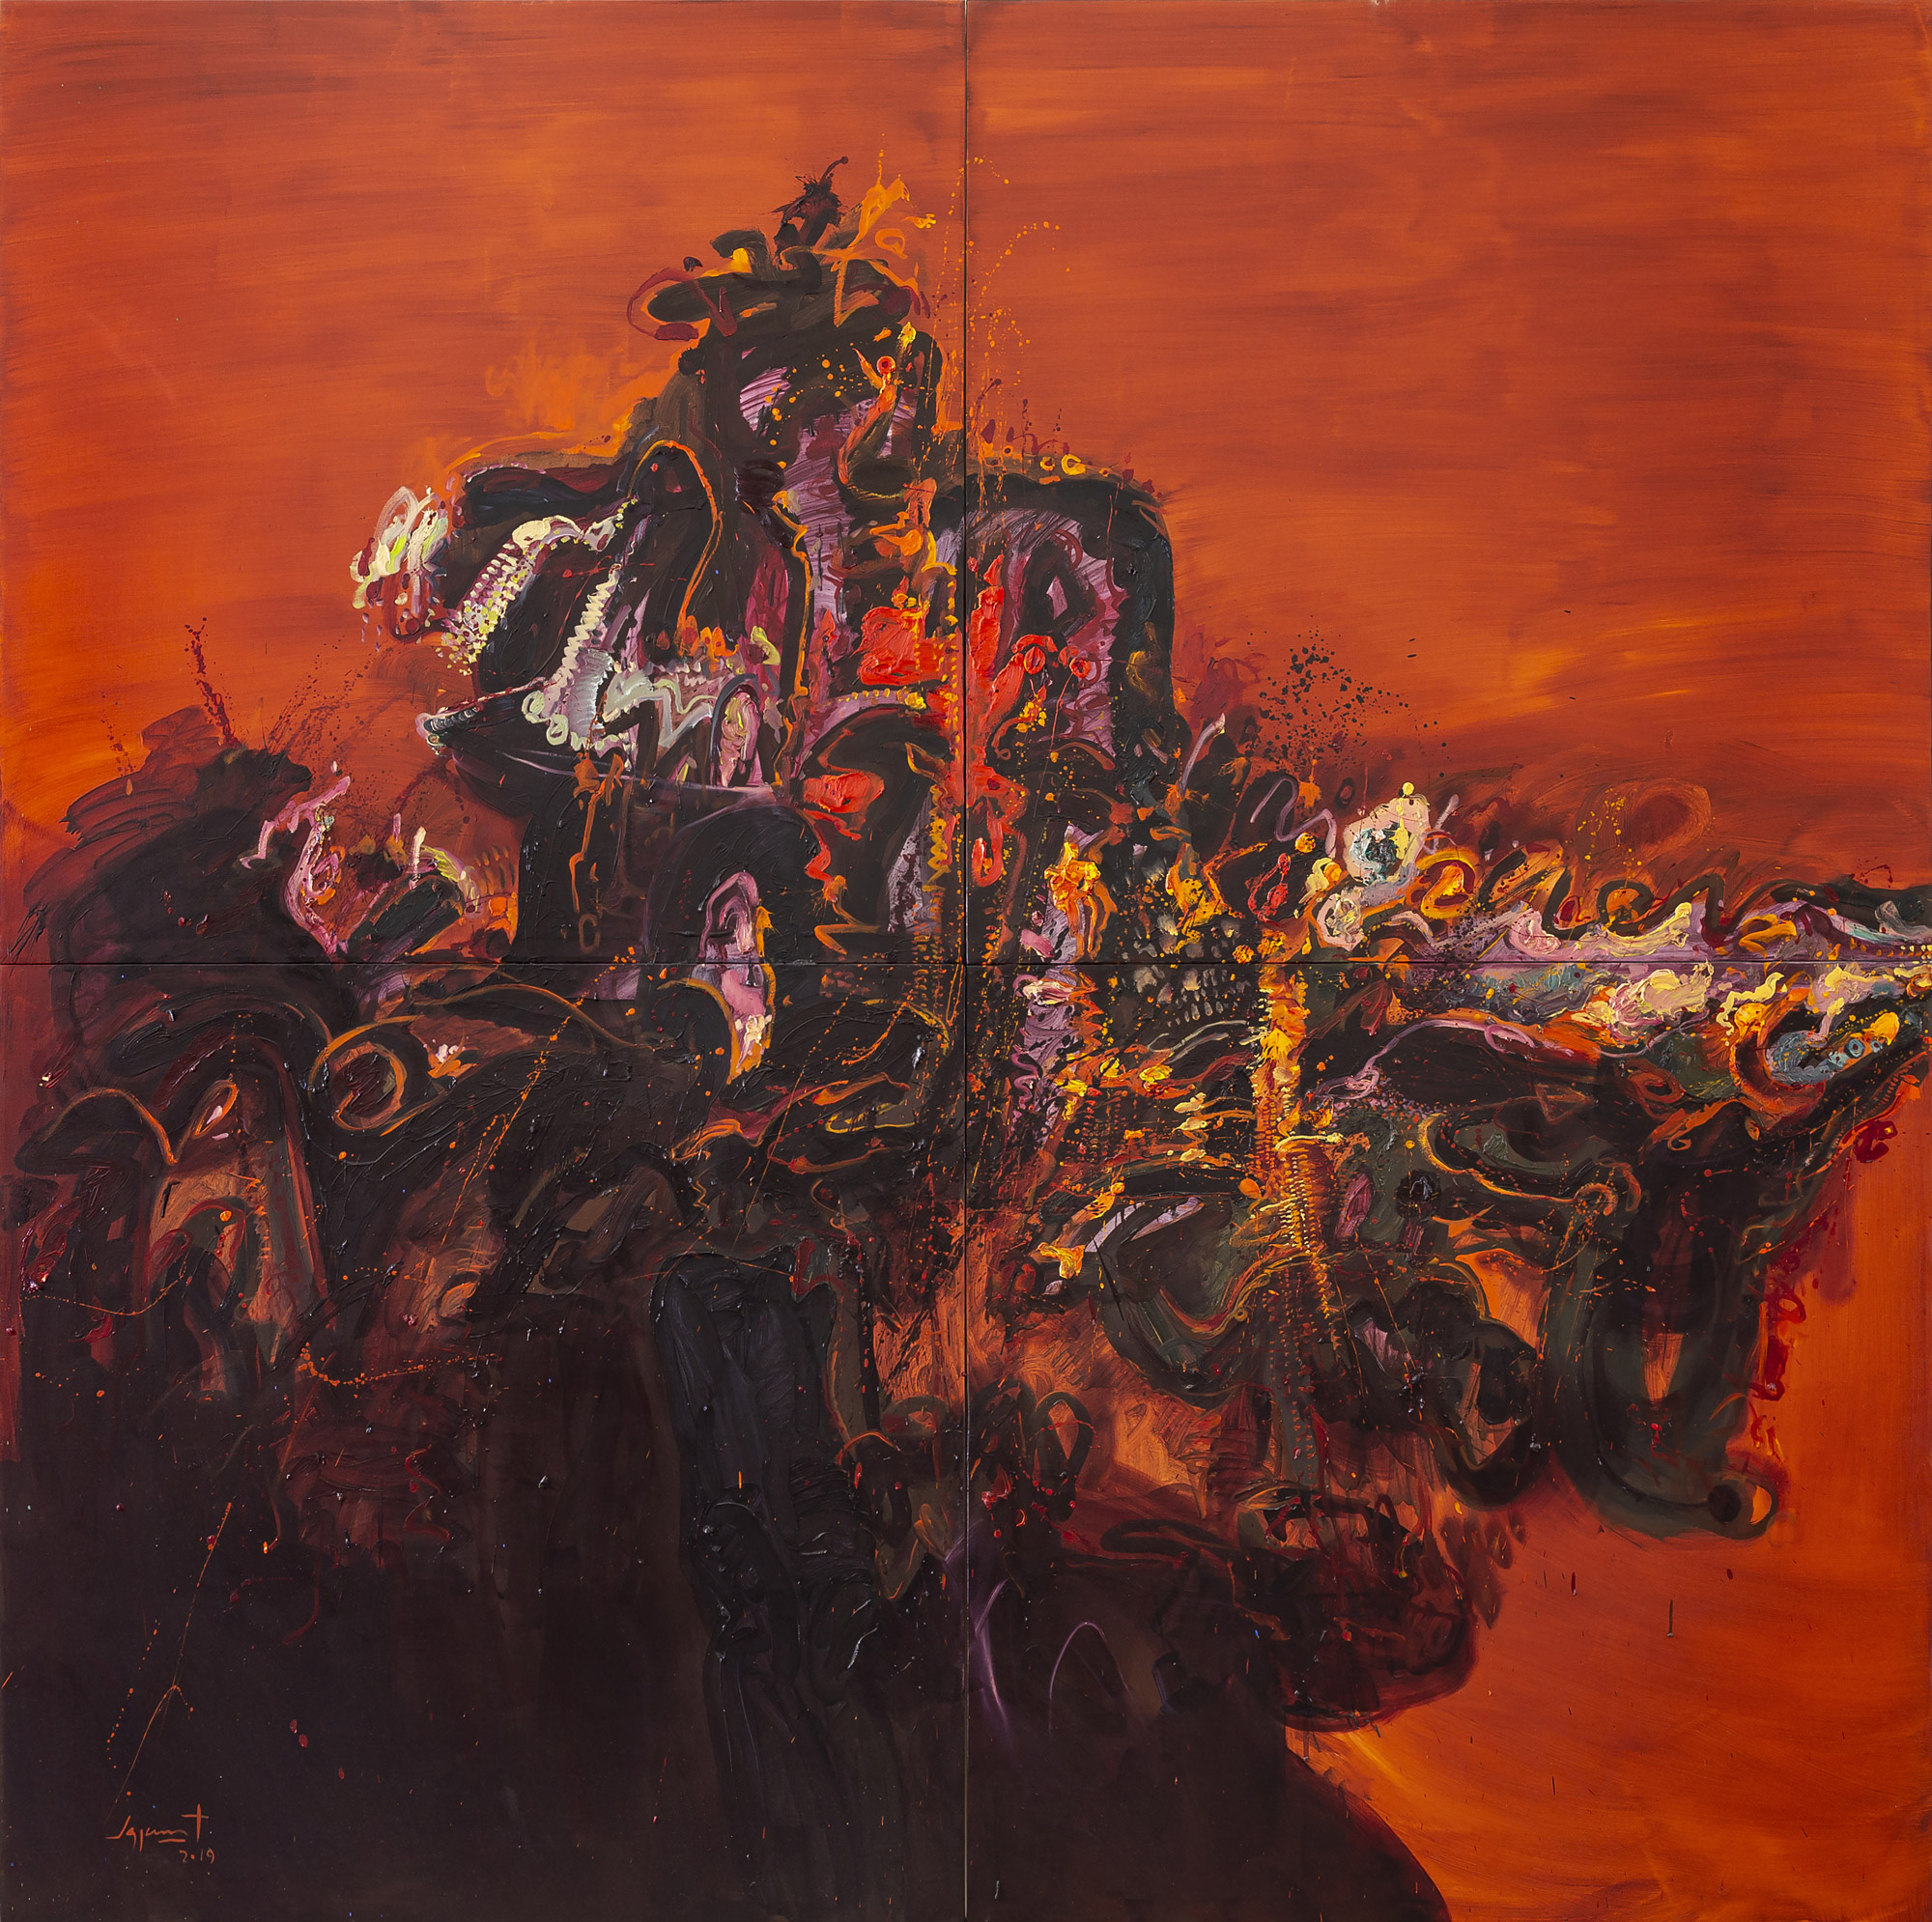 Jazzamoart-Los saxos de Rembrandt. El saxofón y Rembradt, 2019. Oil on canvas. 340x340 cms